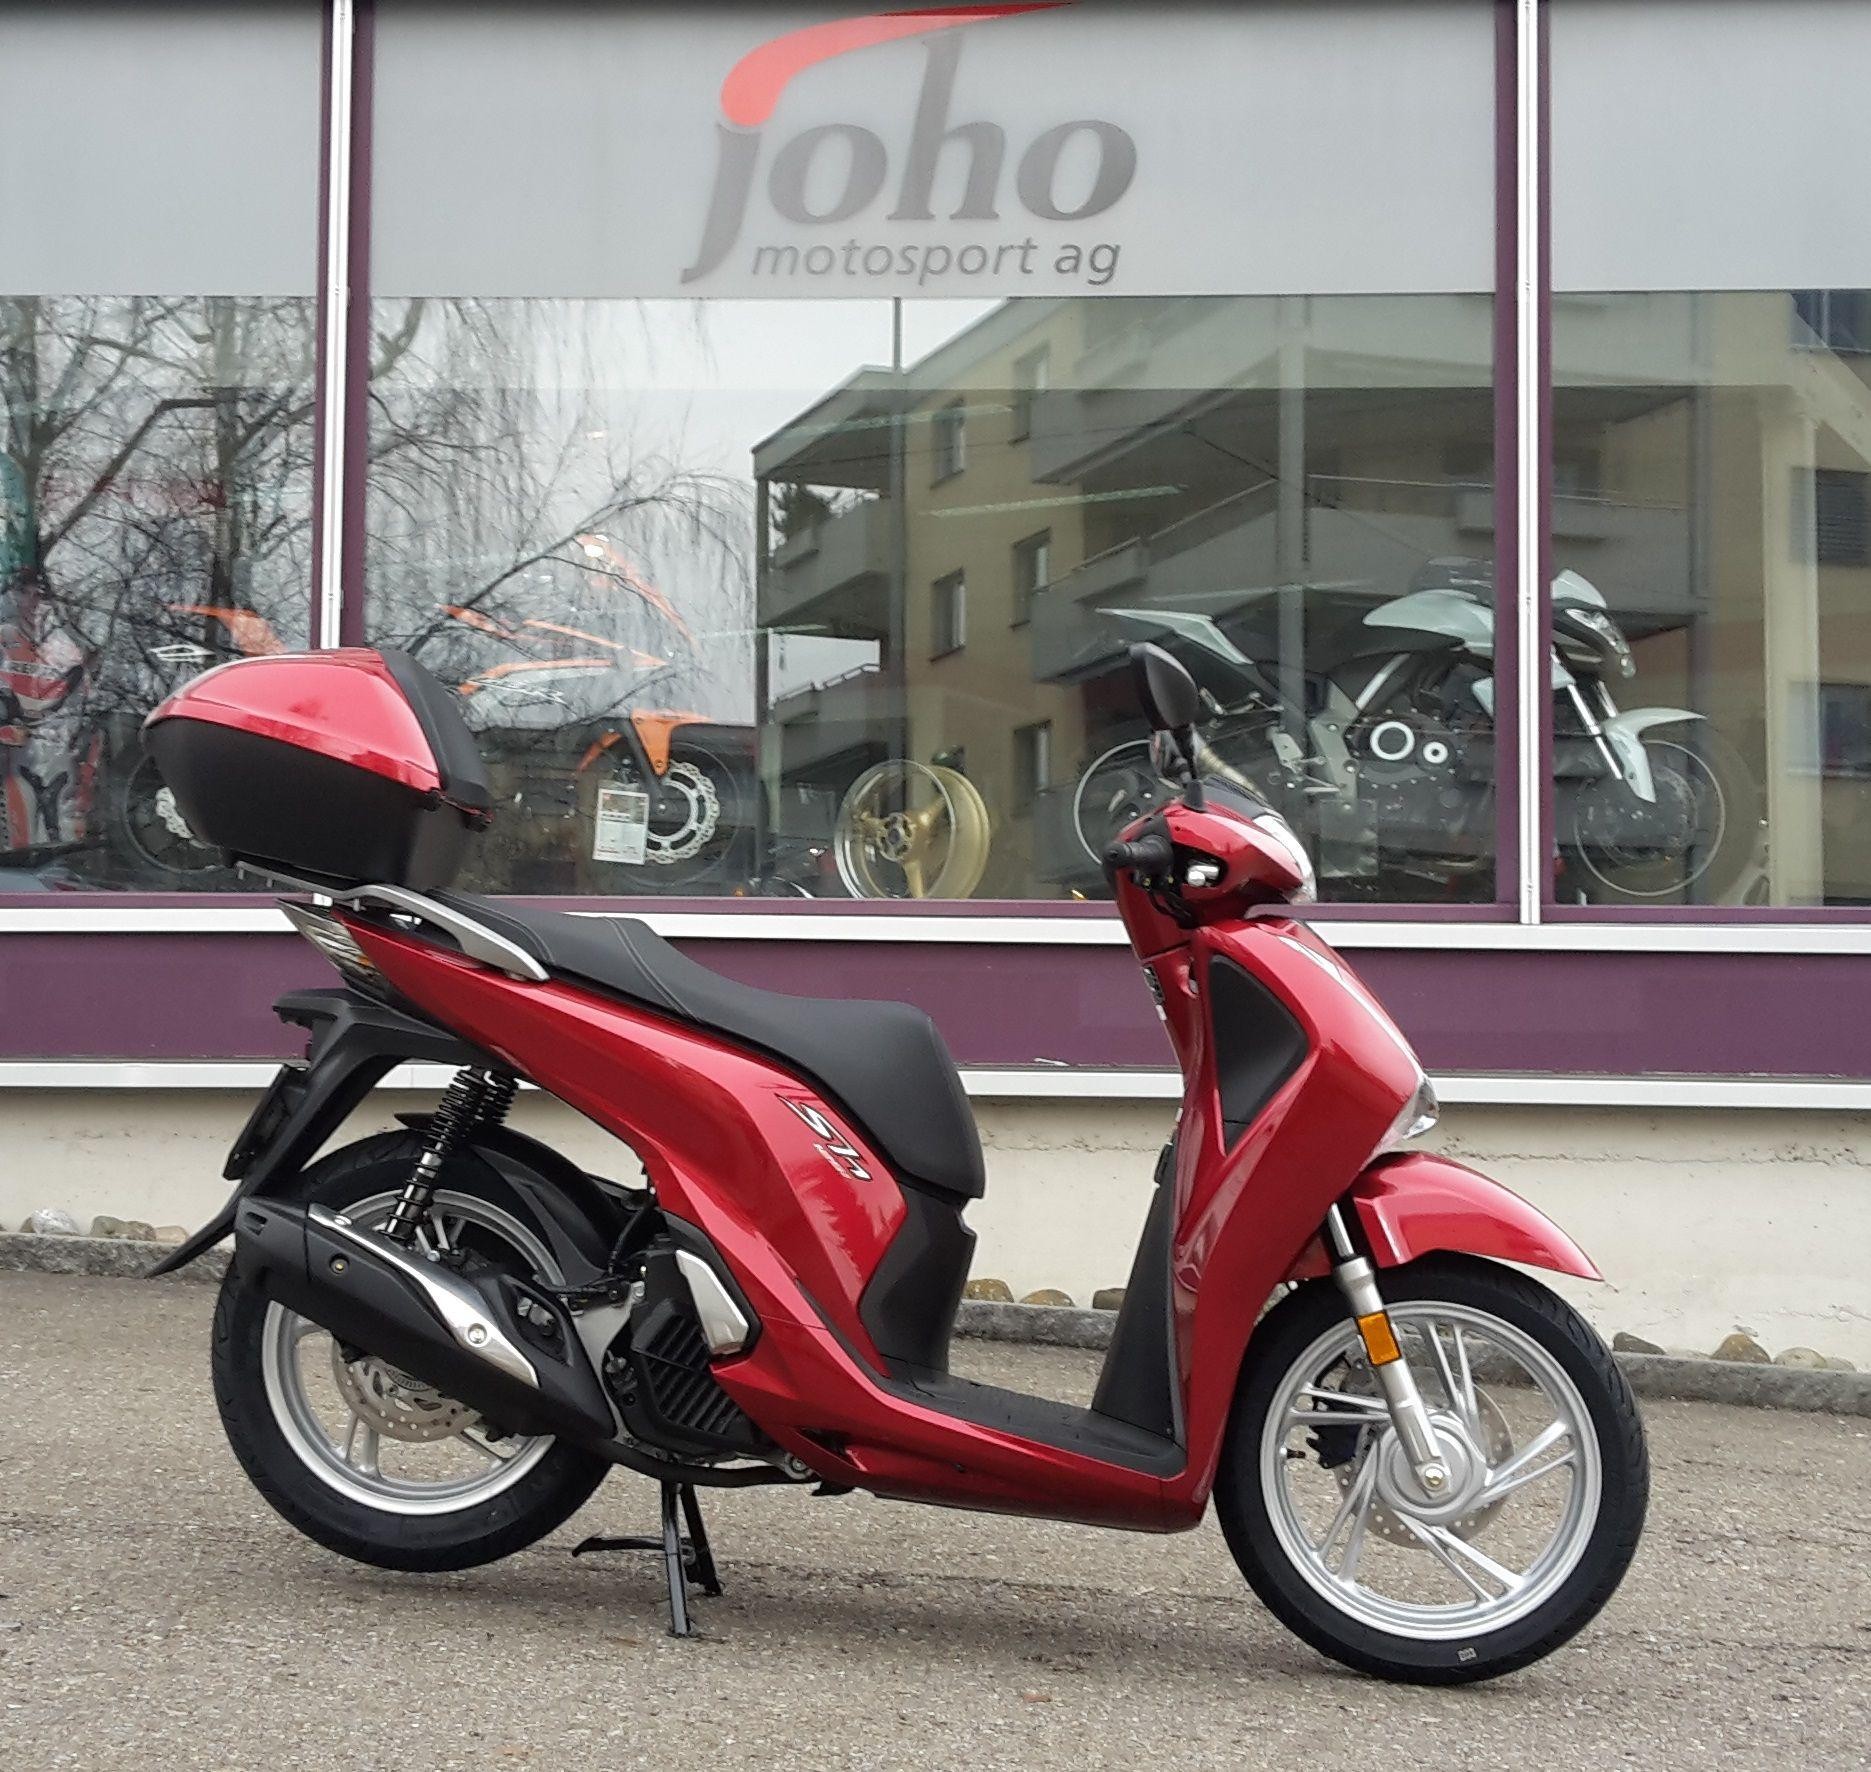 Moto Veicoli nuovi acquistare HONDA SH 125 AD ABS 2018 Joho Motosport ...